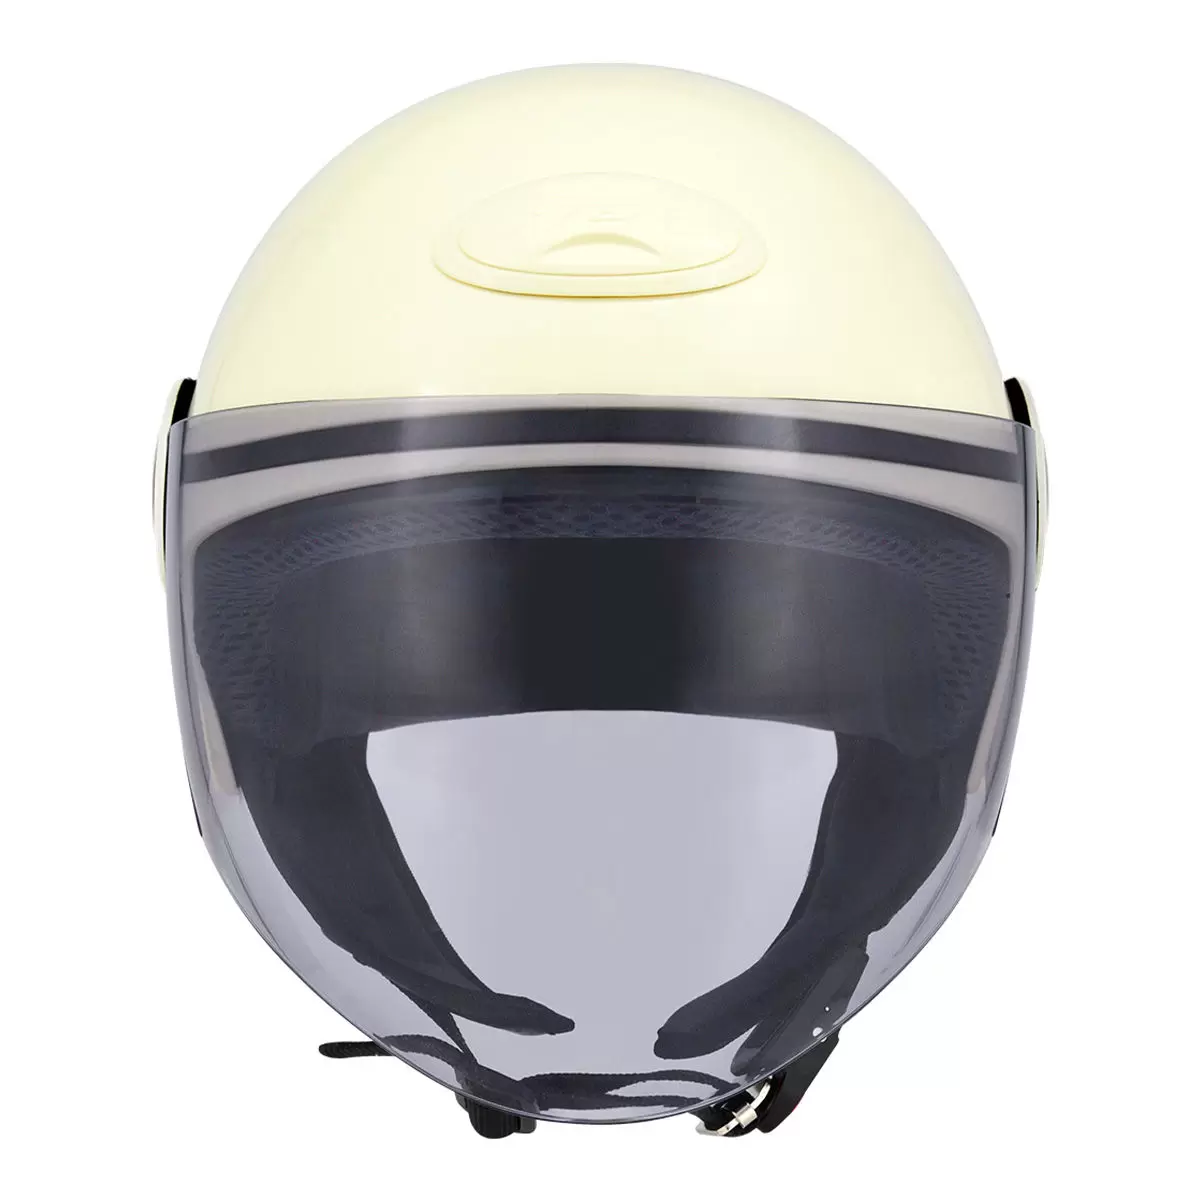 M2R 1/2罩安全帽 騎乘機車用防護頭盔 M-506 亮米 S